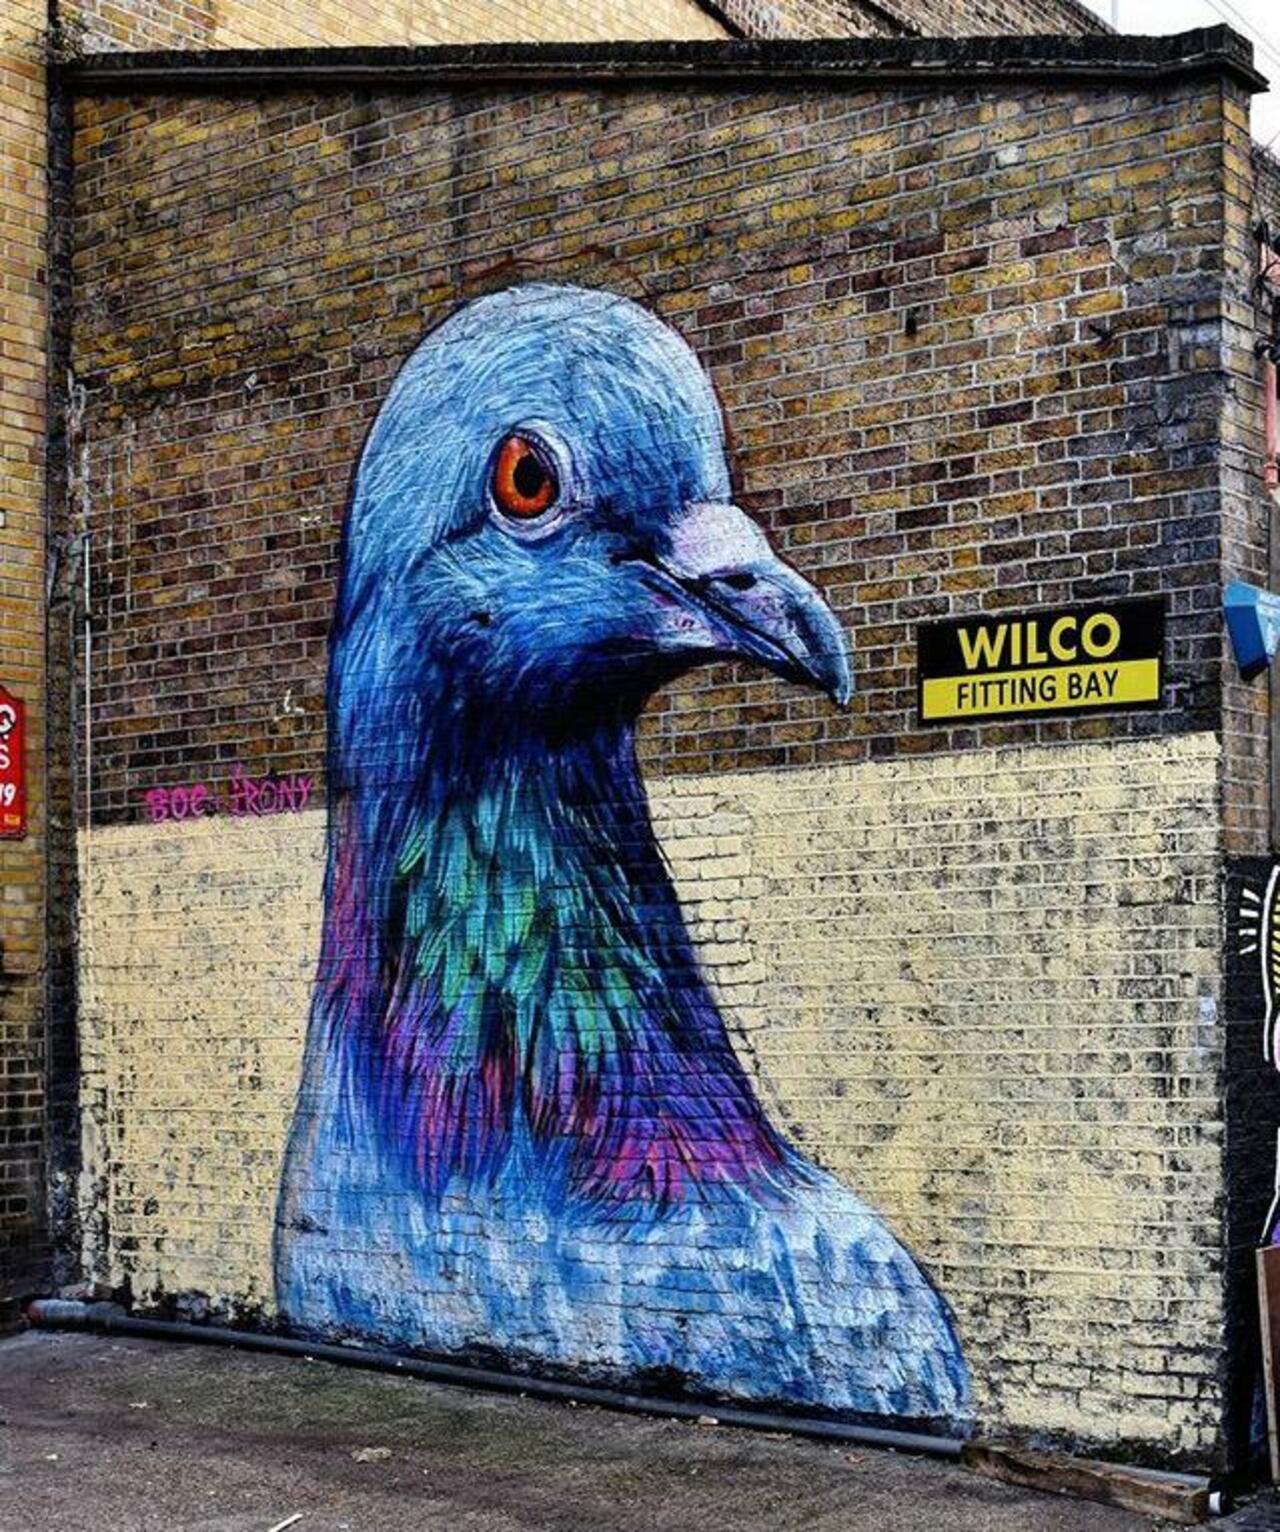 New tumblr post: "Street Art by Placee Boe & whoamirony in London 

#art #graffiti #mural #streetart http://t.co/AgP4oqMutm" …